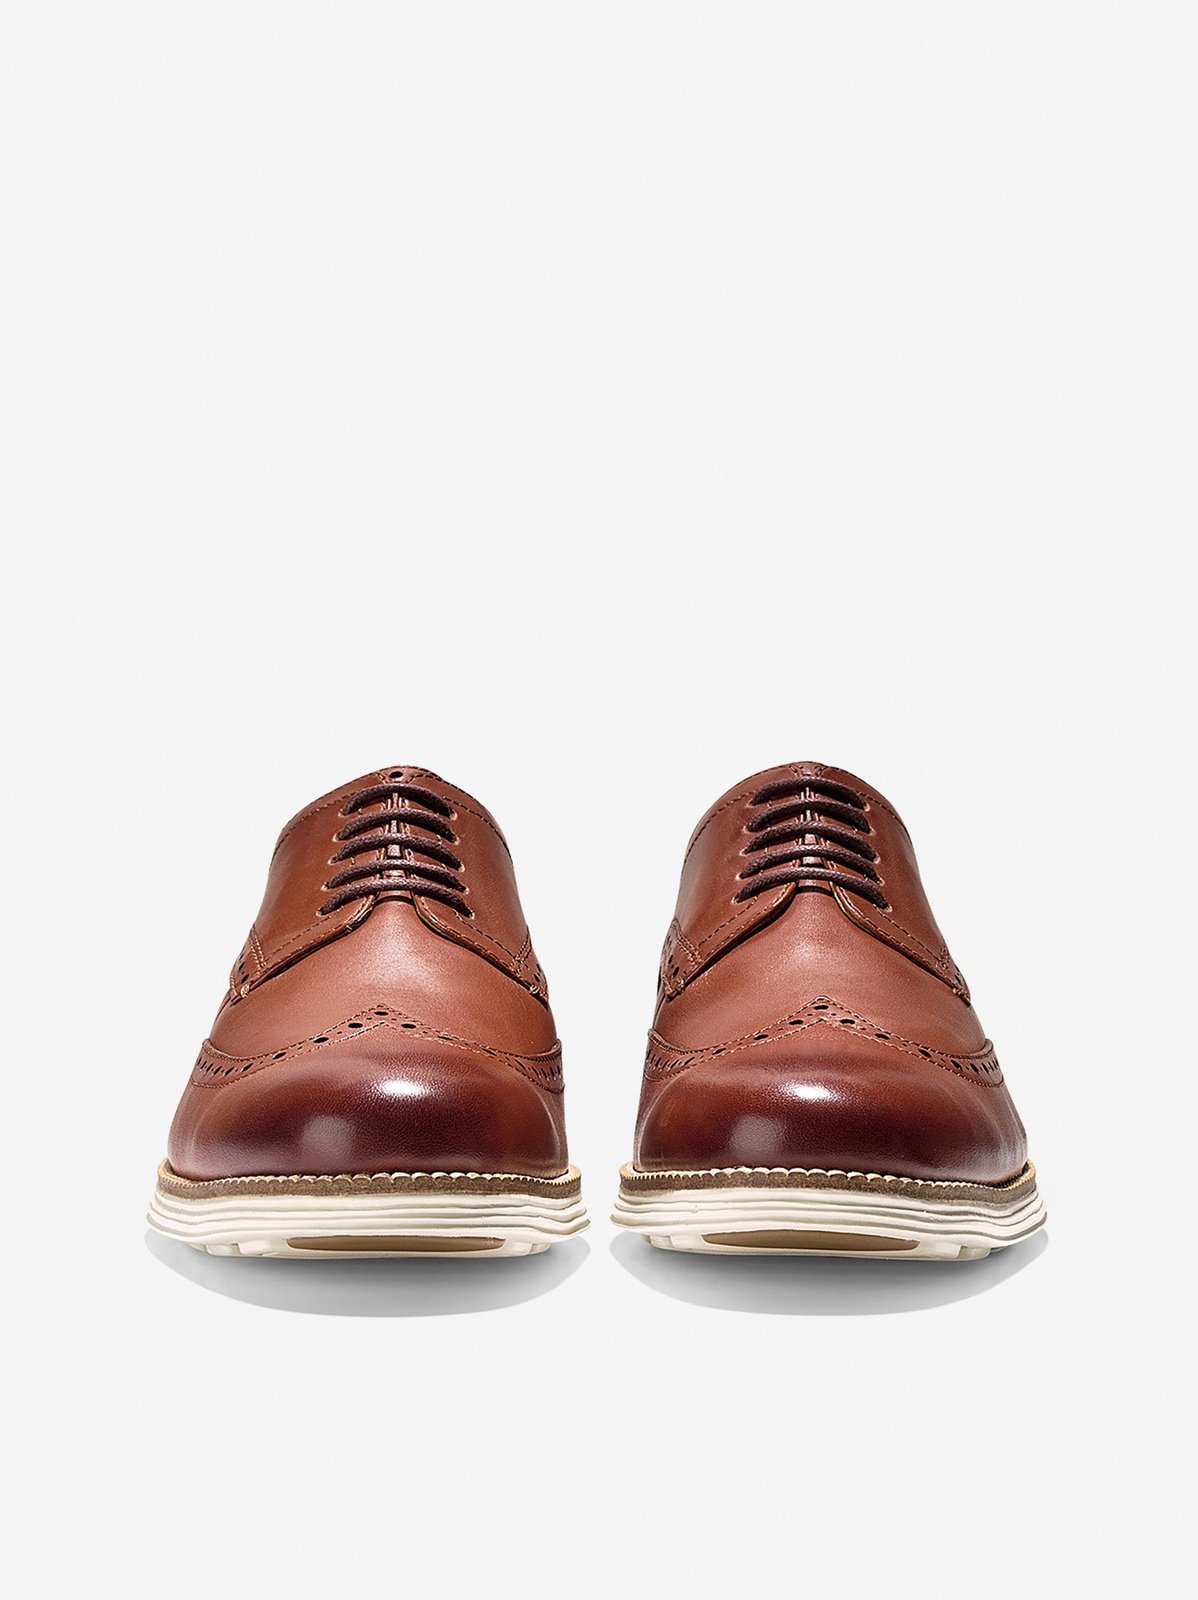 Cole Haan Men's Original Grand Wingtip Oxford Shoes Woodbury/Ivory C20778.